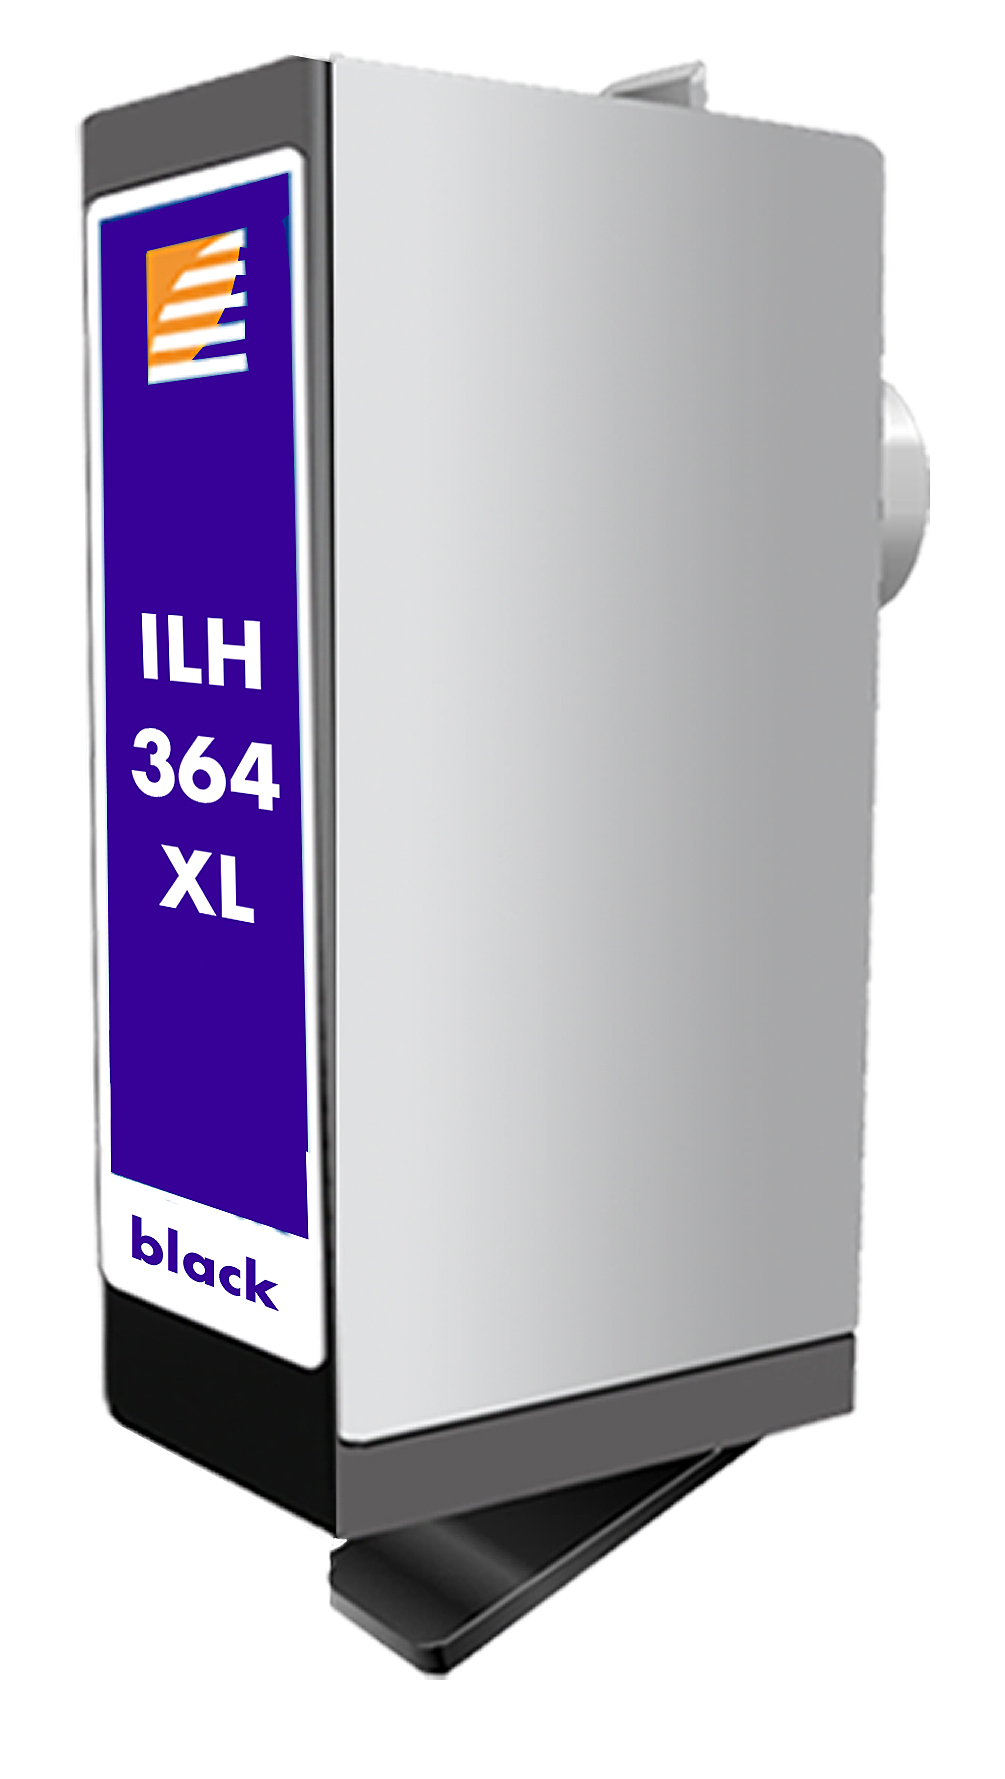 ILH 364 XL black